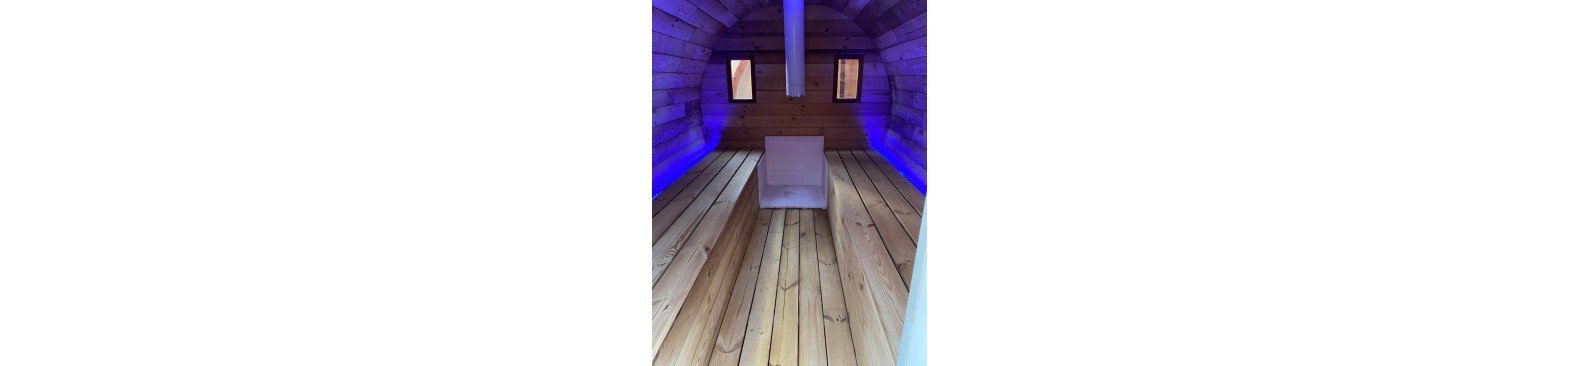 LED Beleuchtung Sauna